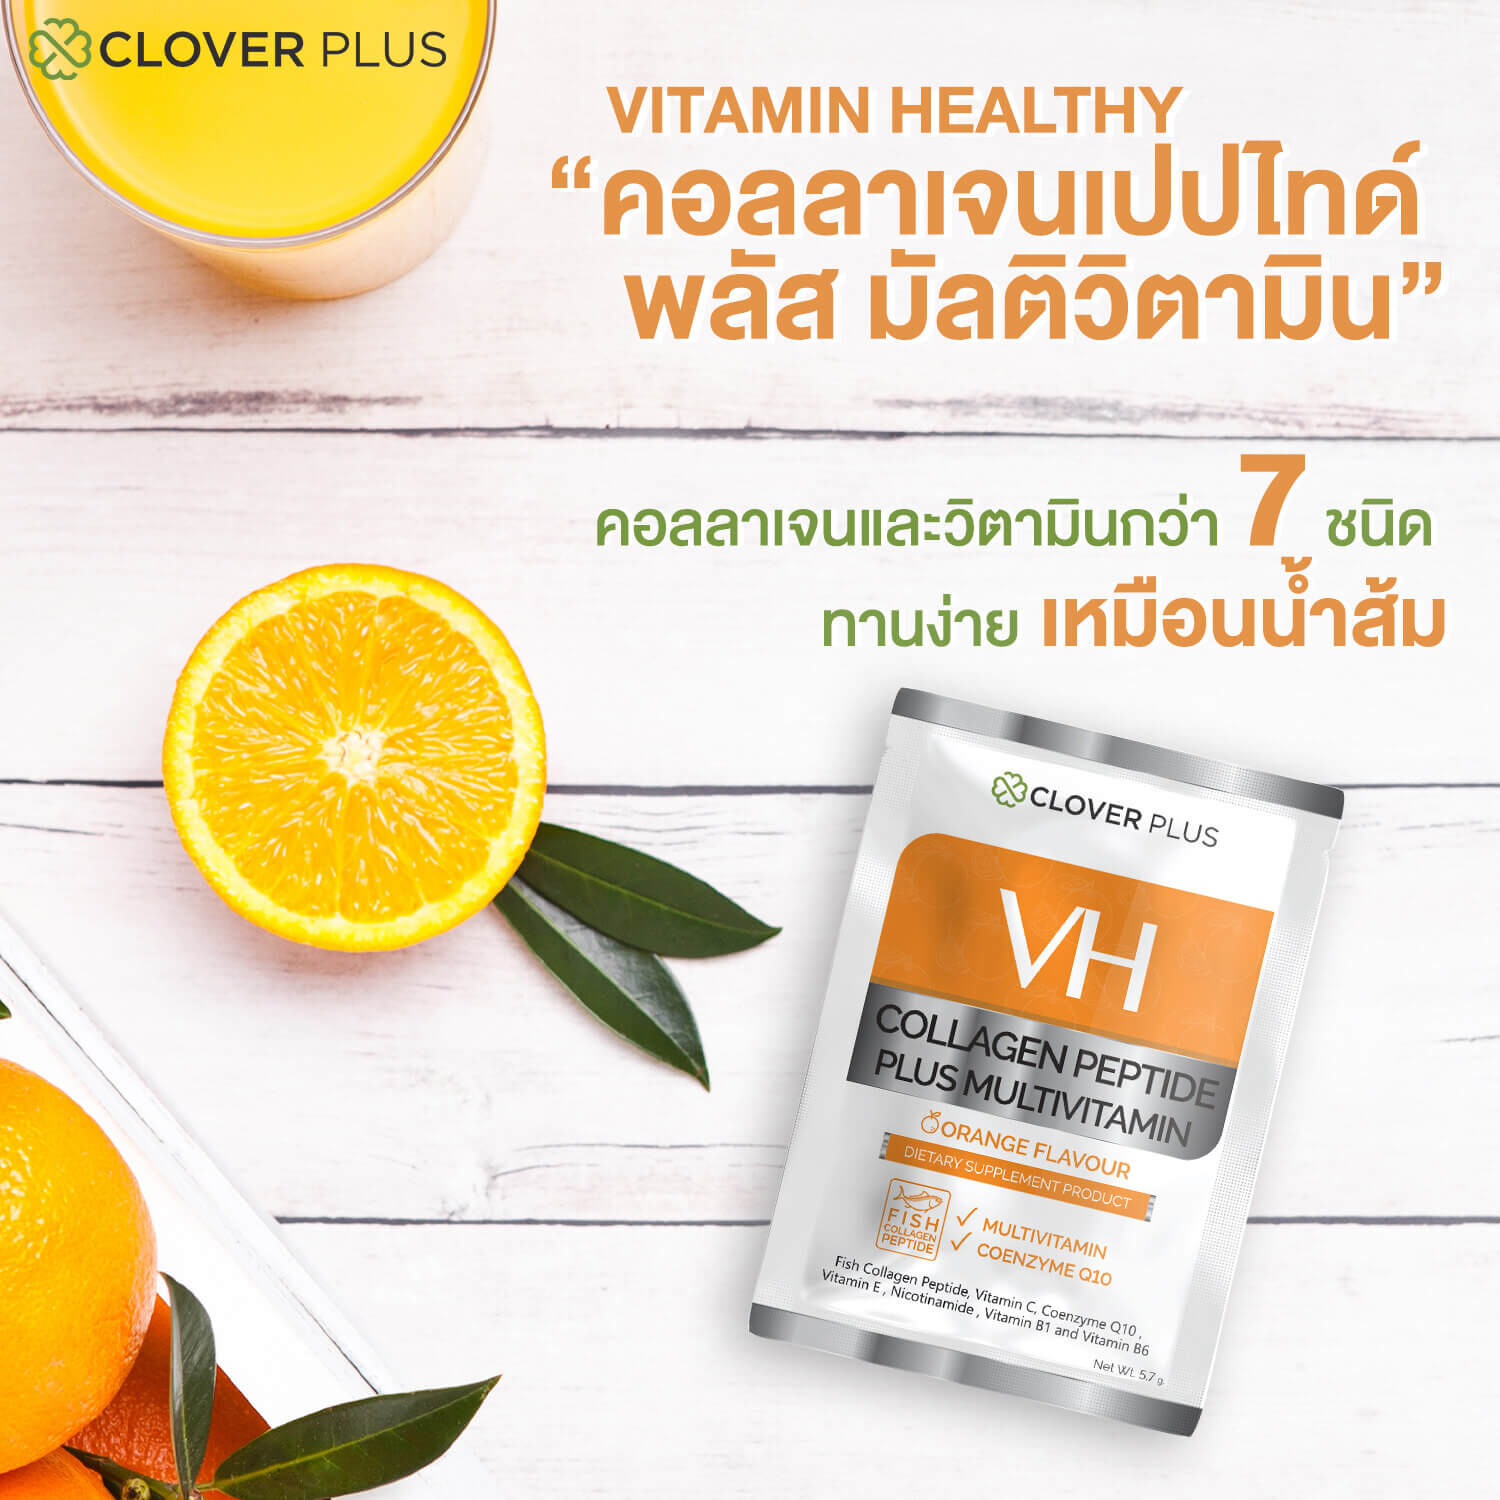 Clover Plus ,Clover Plus VH Collagen Peptide And Vitamin, VH Collagen Peptide And Vitamin,Collagen ,คอลลาเจน